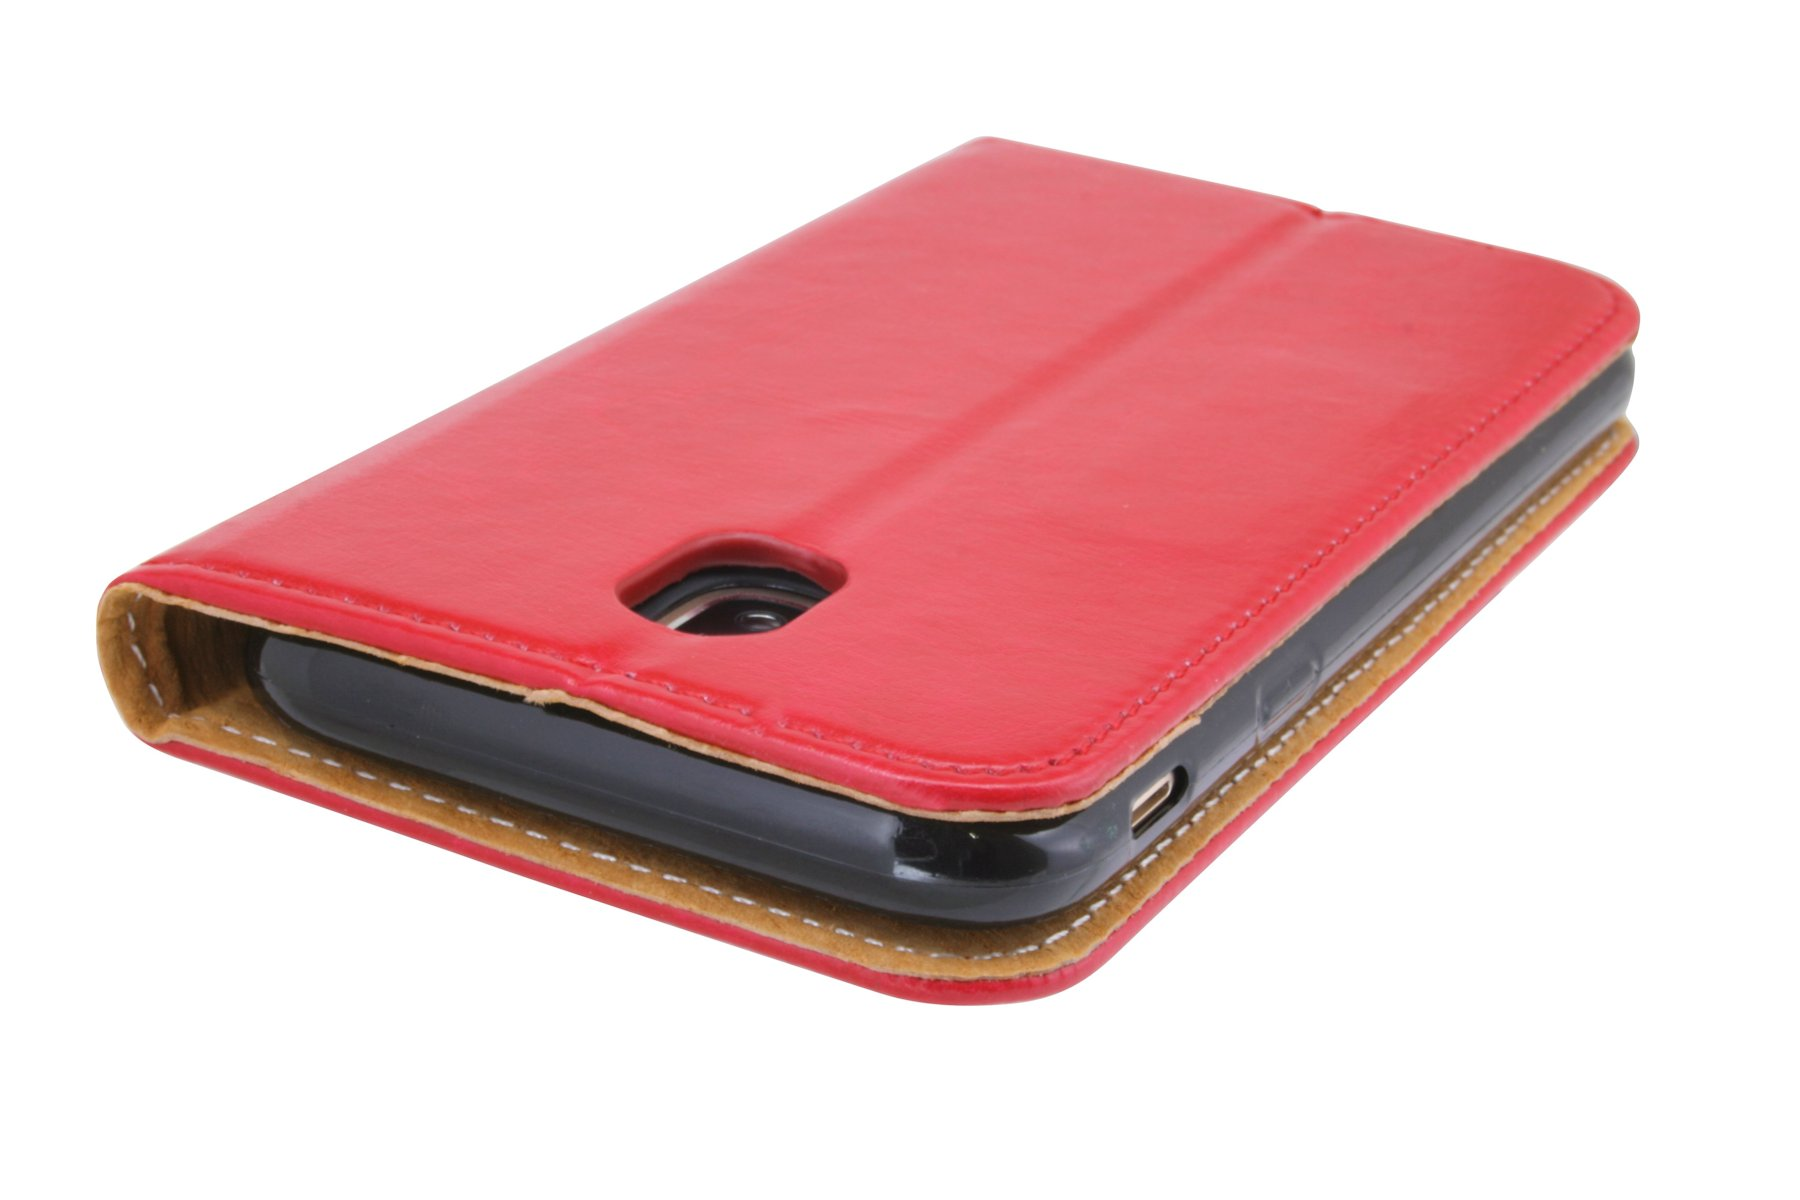 Rot Leder Echt S8, Bookcover, COFI Galaxy Samsung, Case,